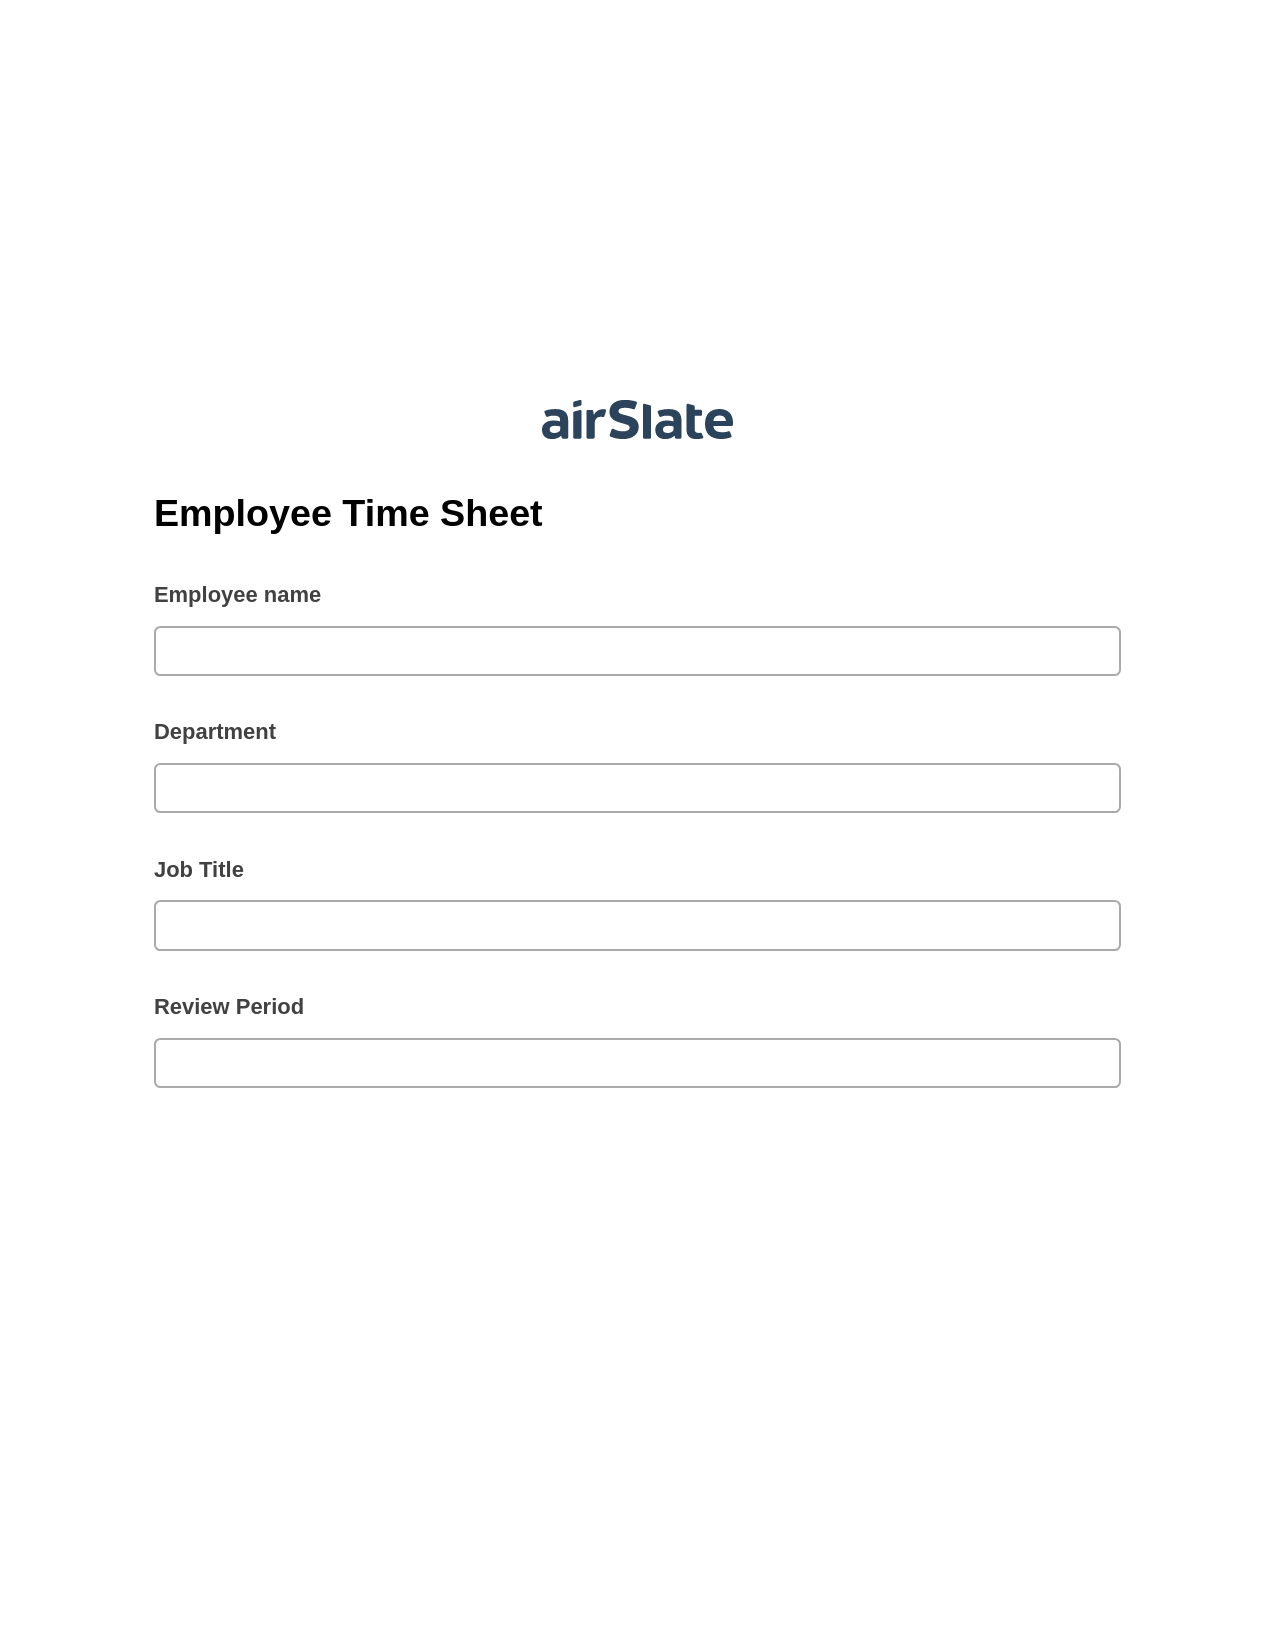 Employee Time Sheet Pre-fill from CSV File Bot, Create Salesforce Records Bot, Slack Notification Postfinish Bot